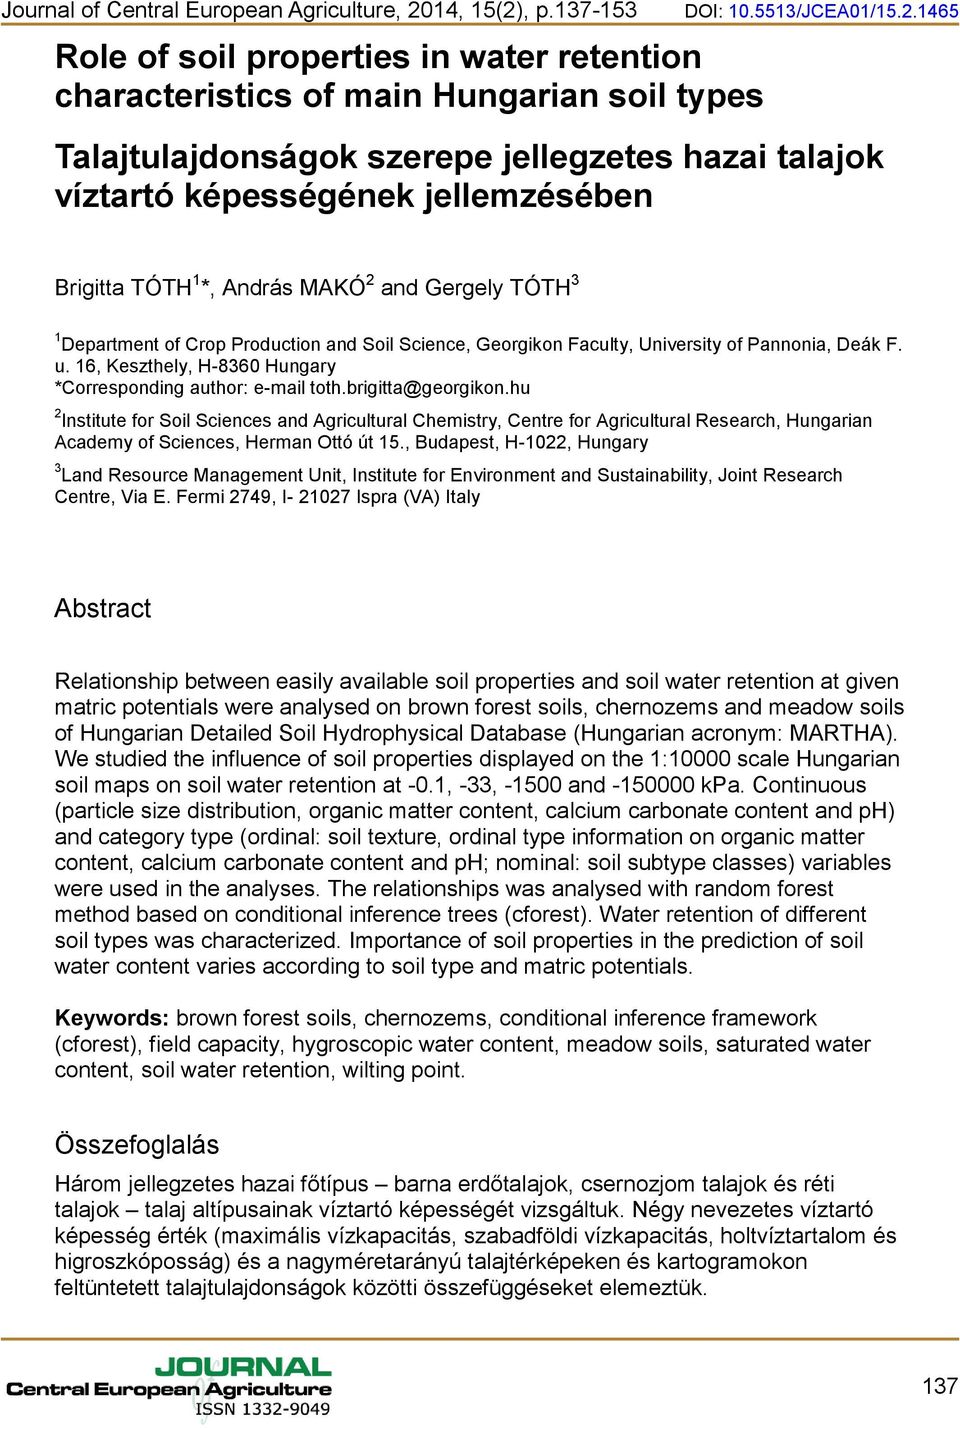 , p.137-153 Role of soil properties in water retention characteristics of main Hungarian soil types DOI: 10.5513/JCEA01/15.2.